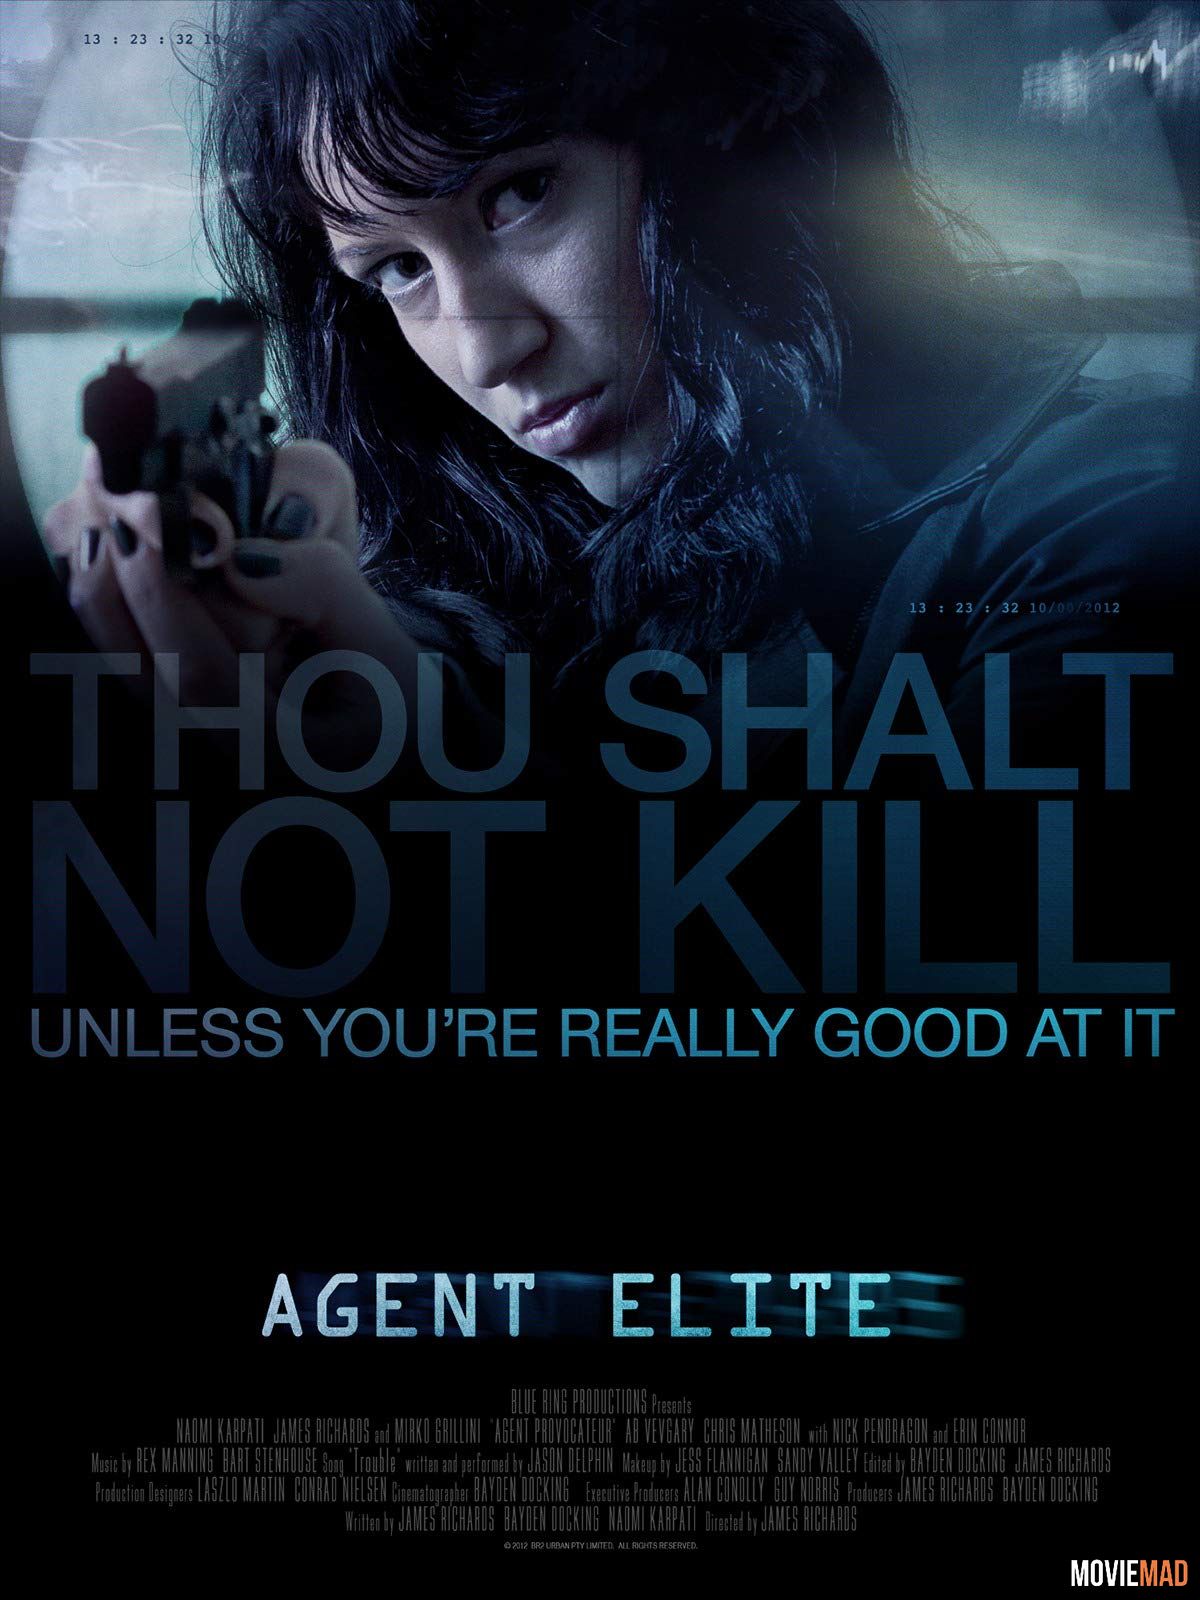 Agent Elite (2012) Hindi Dubbed ORG HDRip Full Movie 720p 480p